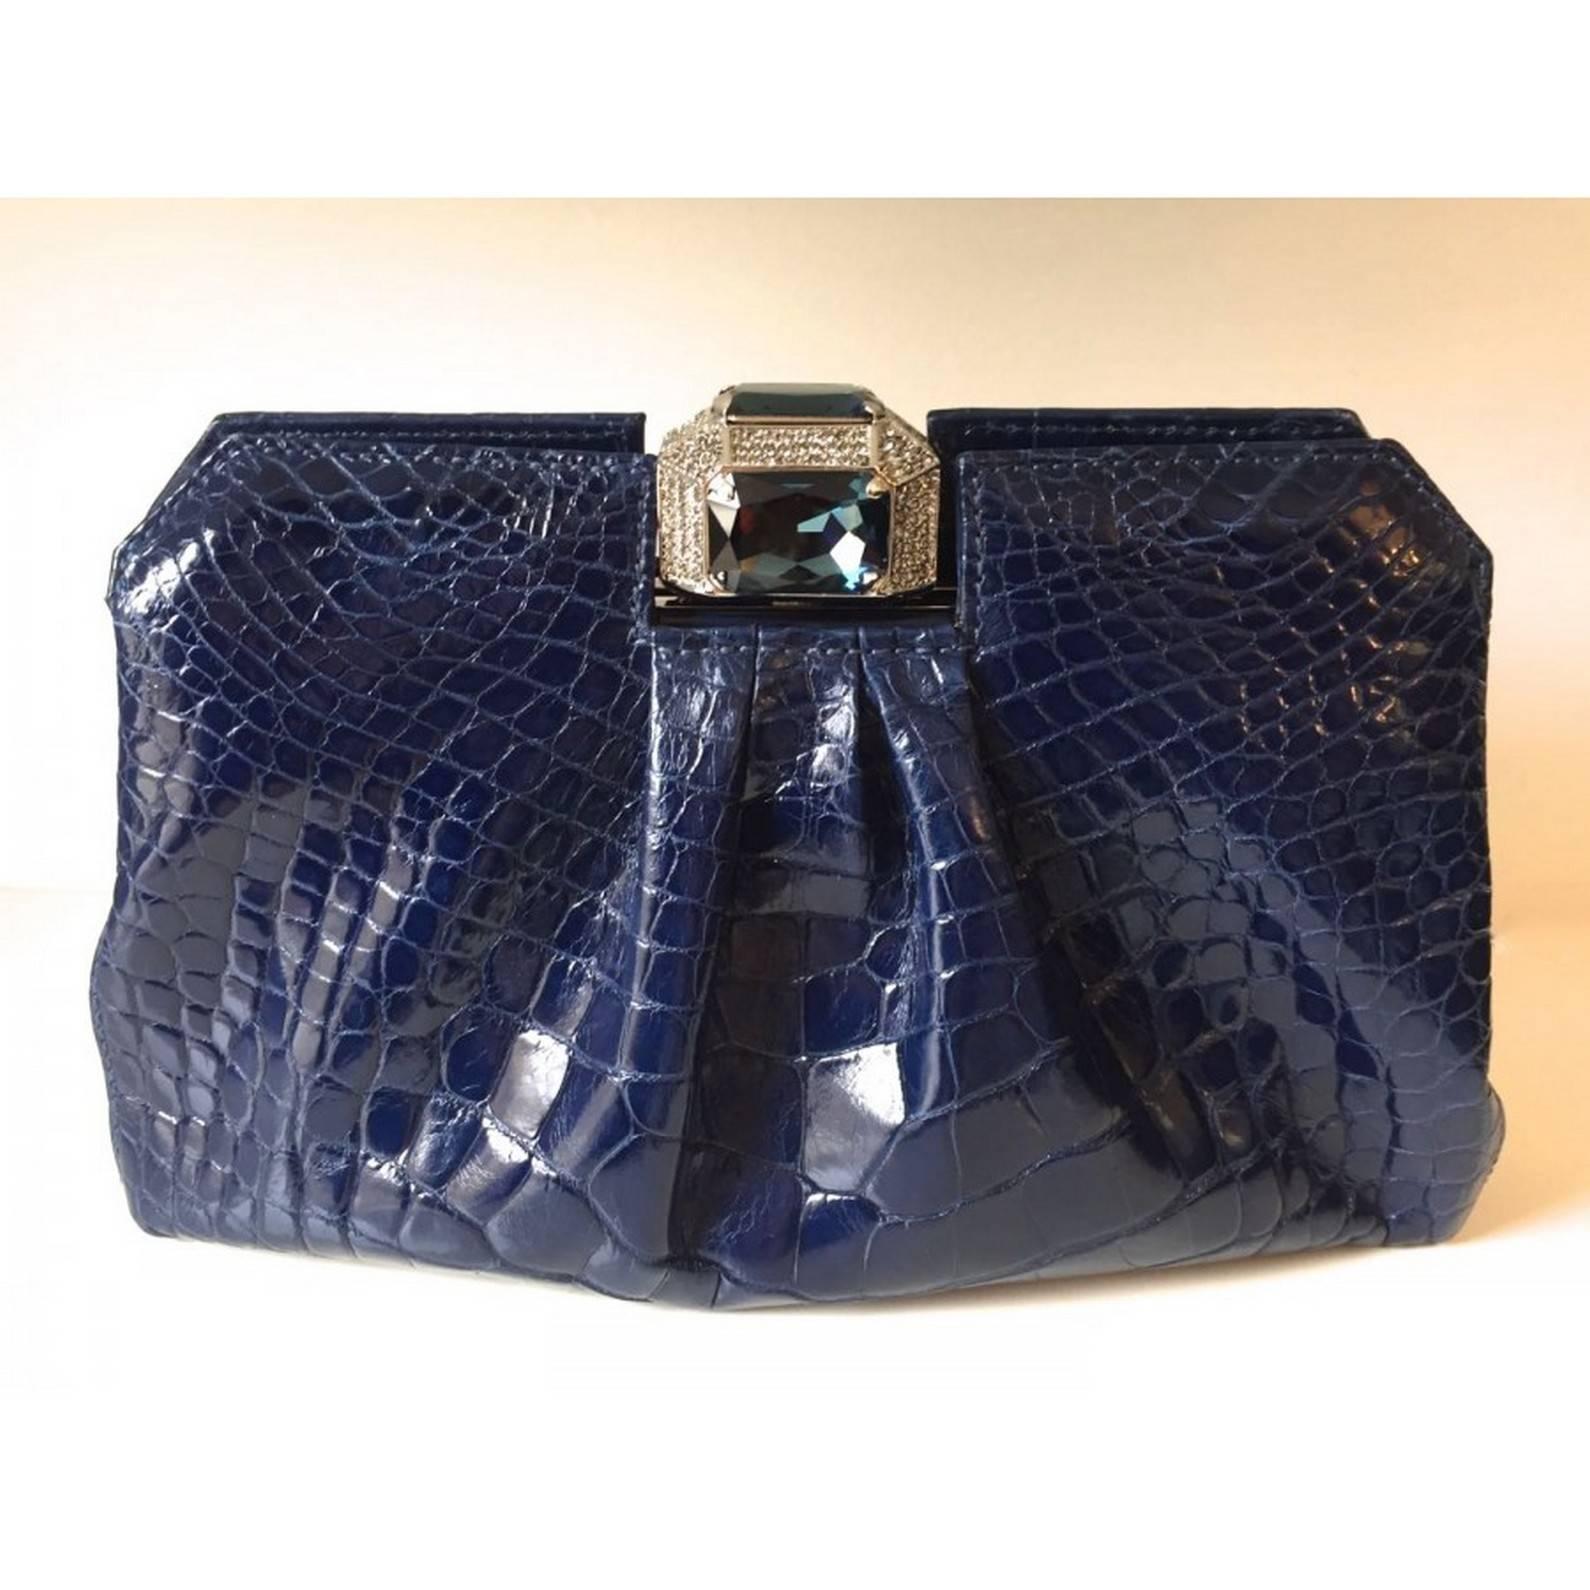 Stunning Valentino Alligator Blue and Swarovski crystals Clutch or Evening Bag 1